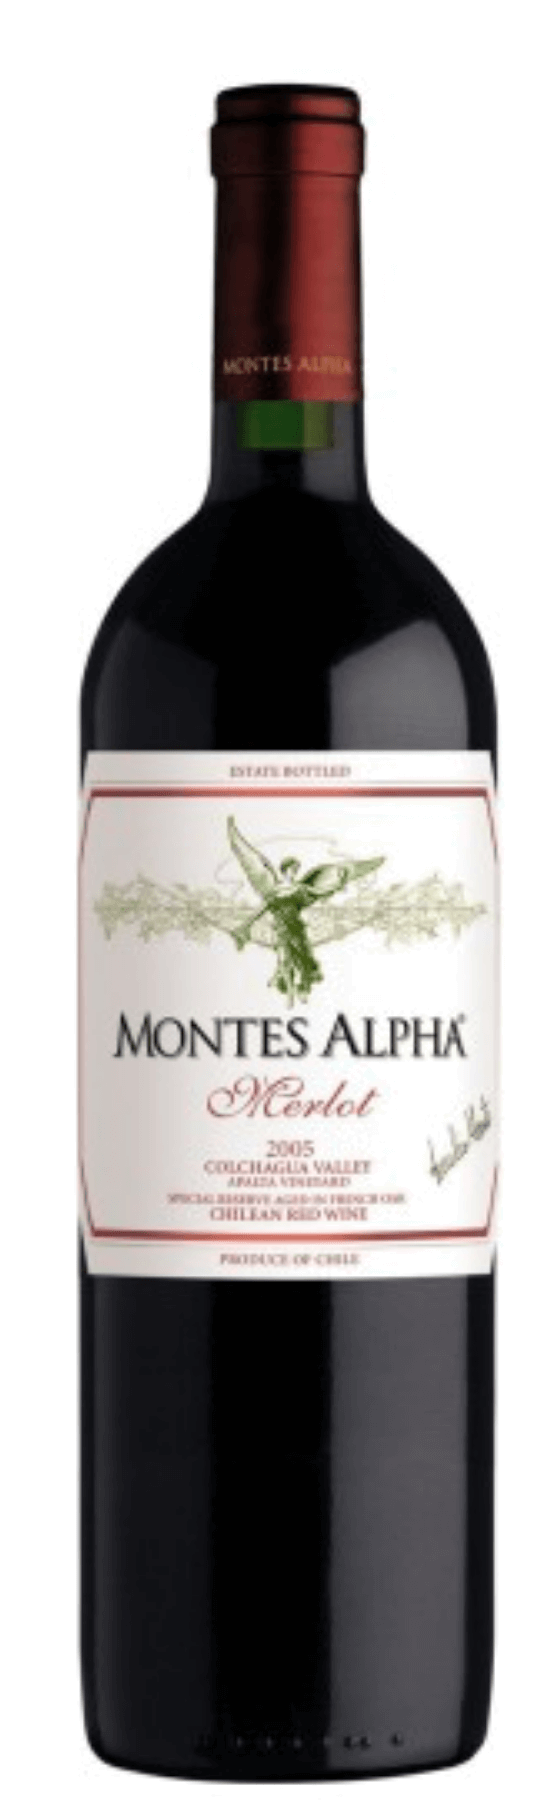 Montes Alpha Merlot